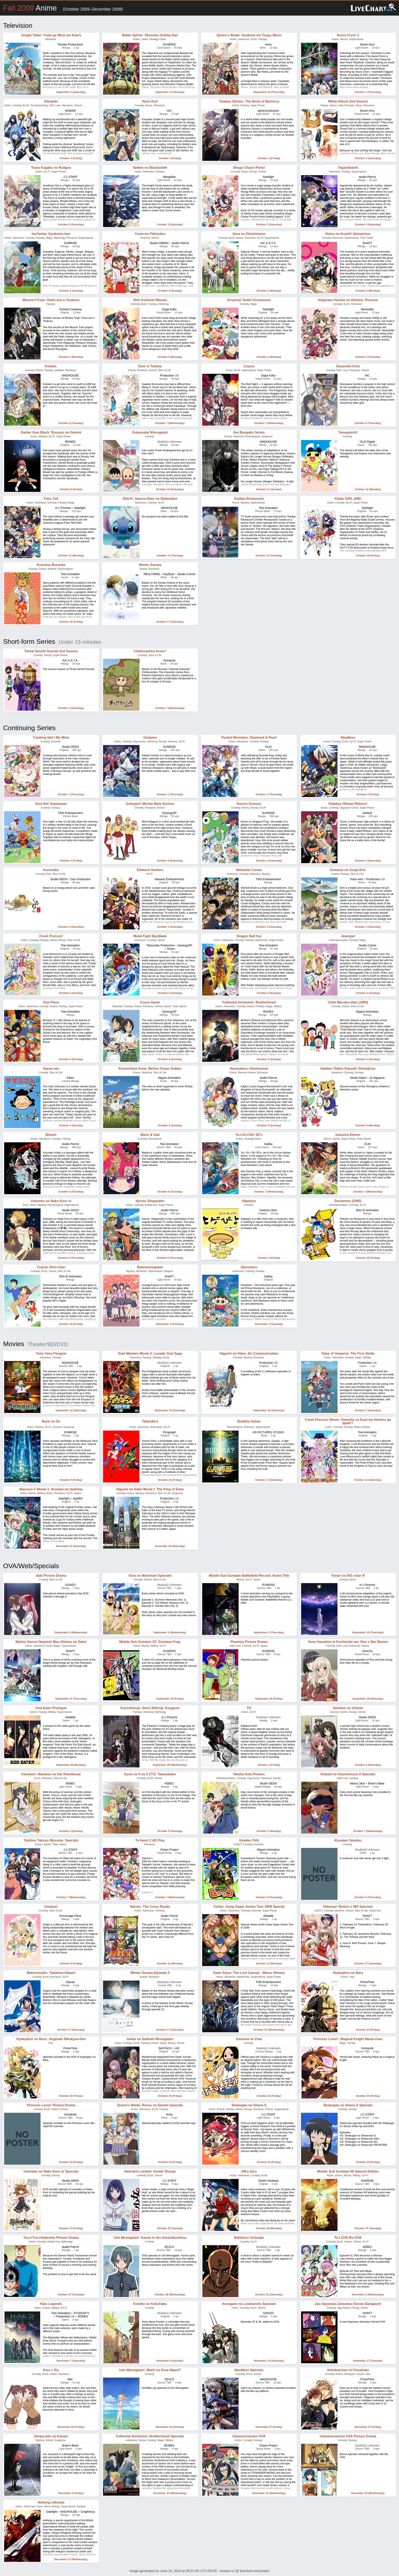 Summer 2009 Anime, Seasonal Chart